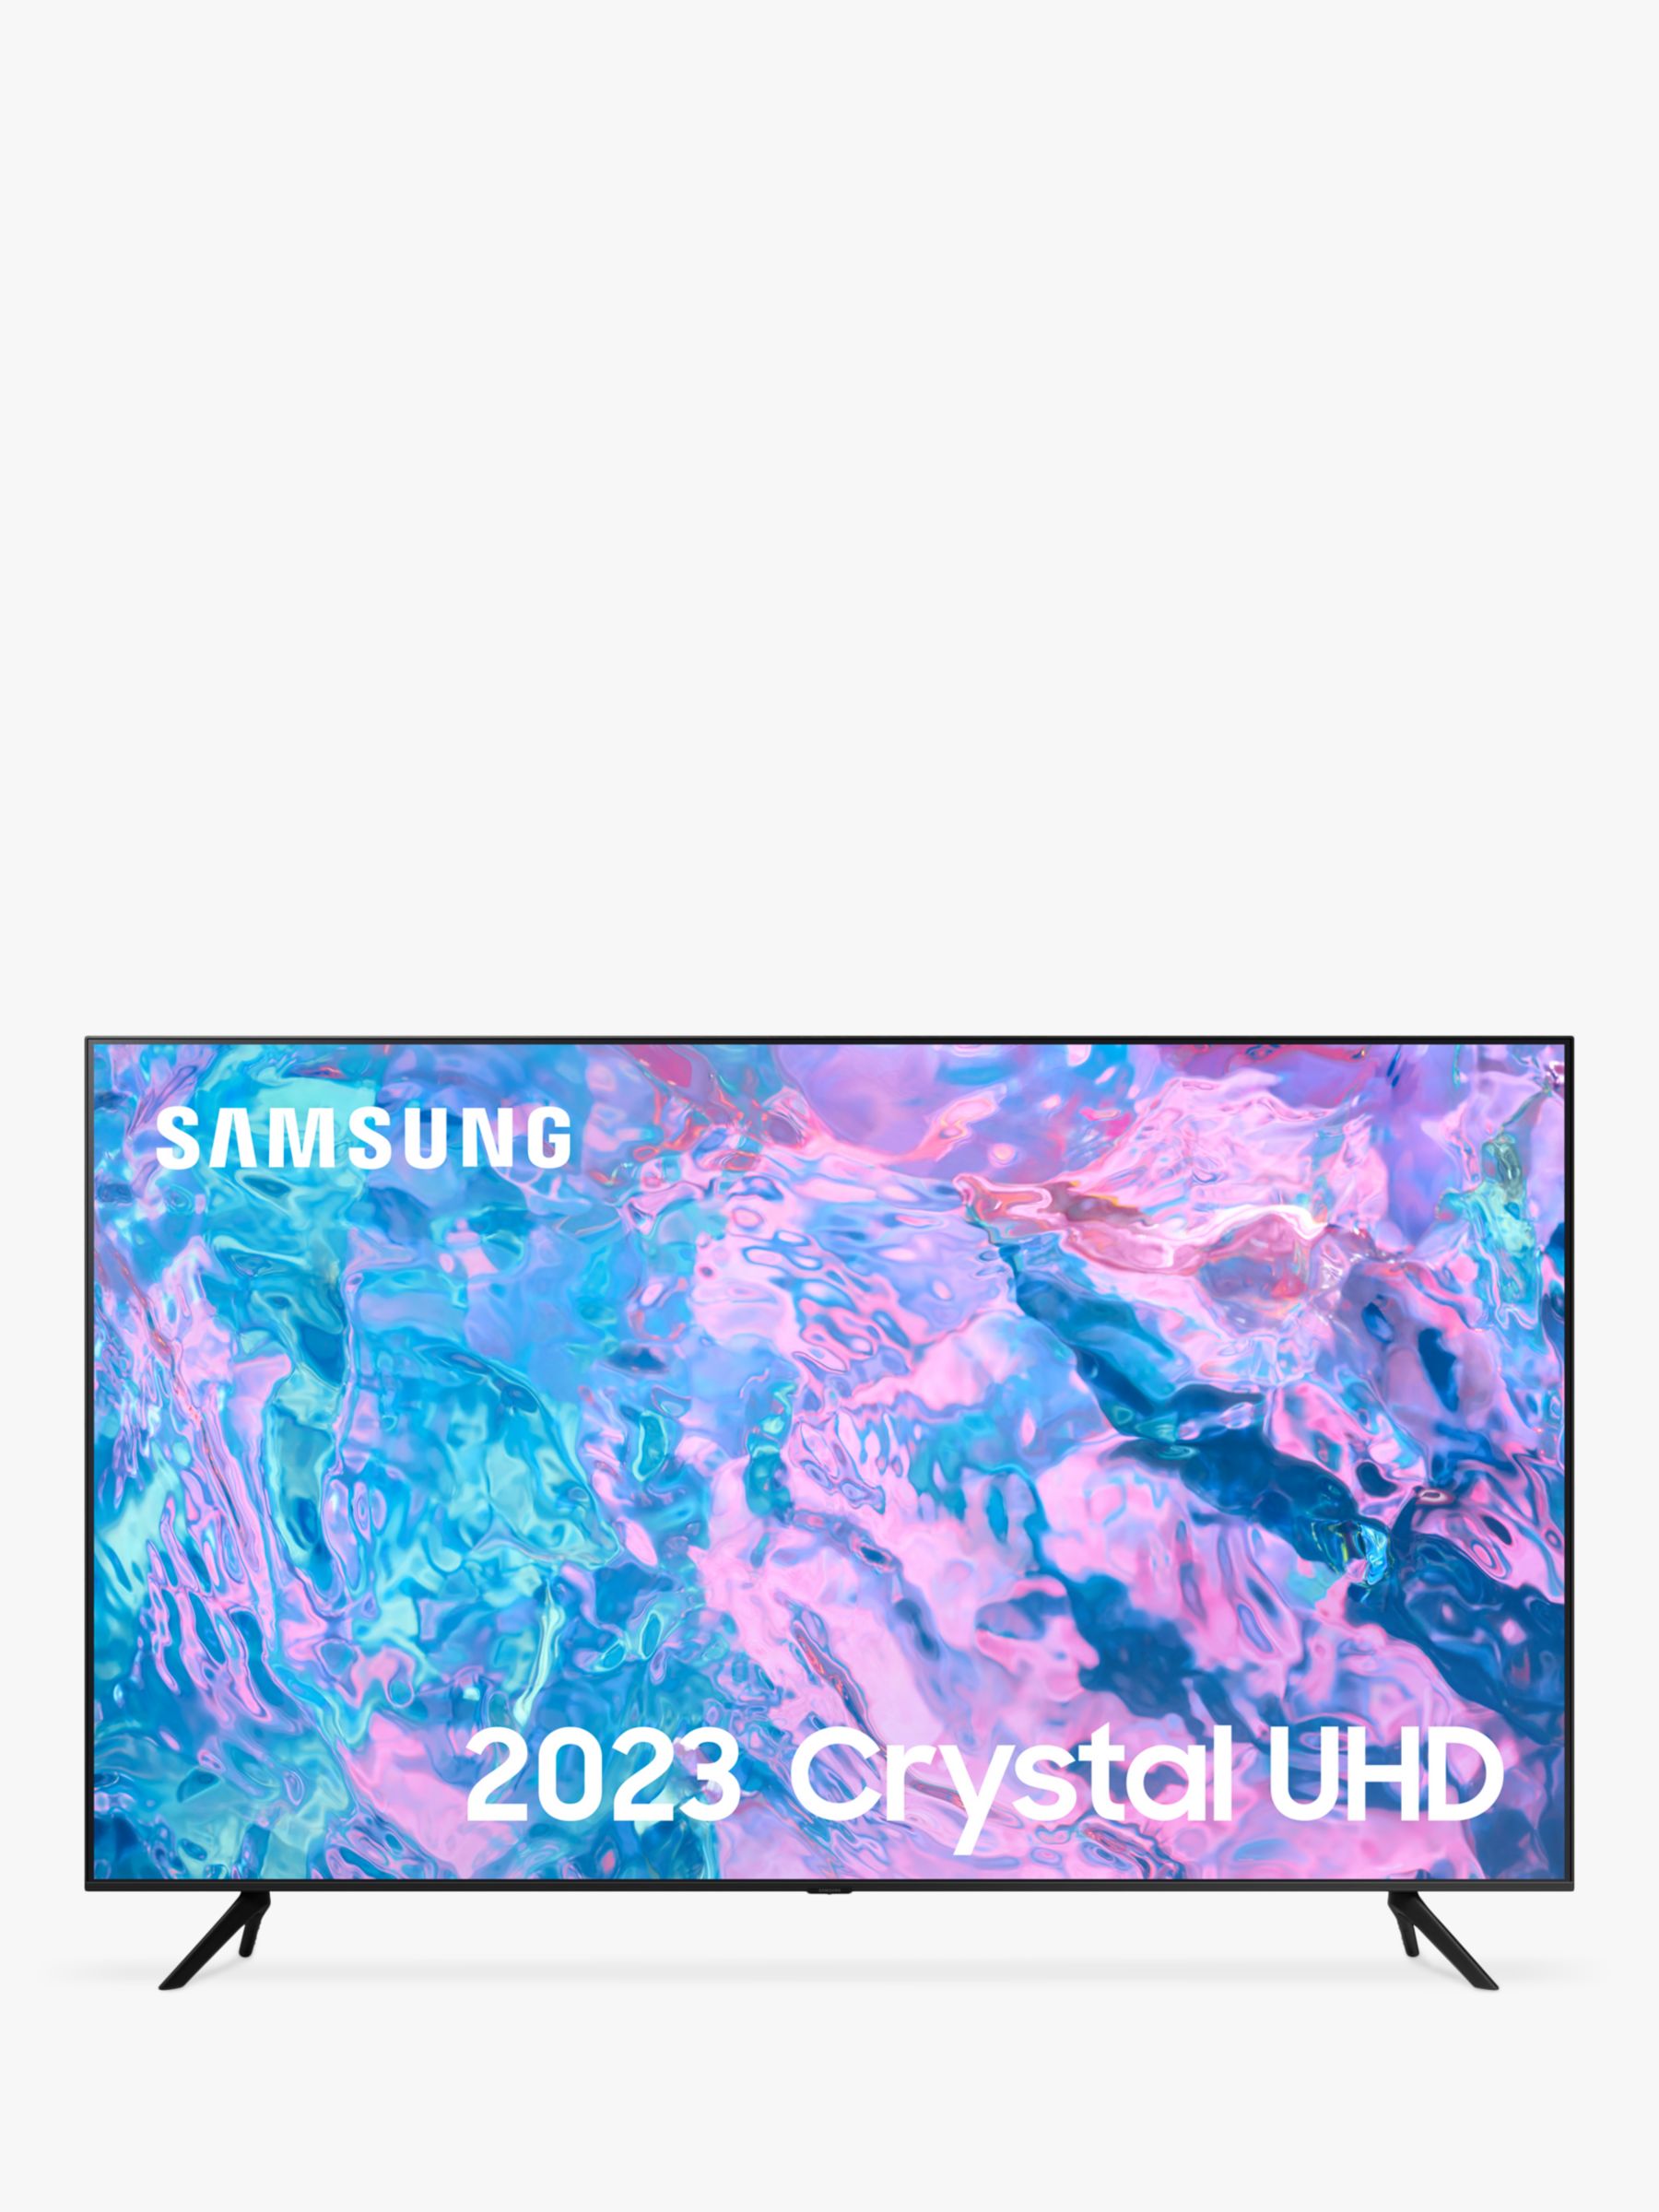 Coding Ultra HD Desktop Background Wallpaper for 4K UHD TV